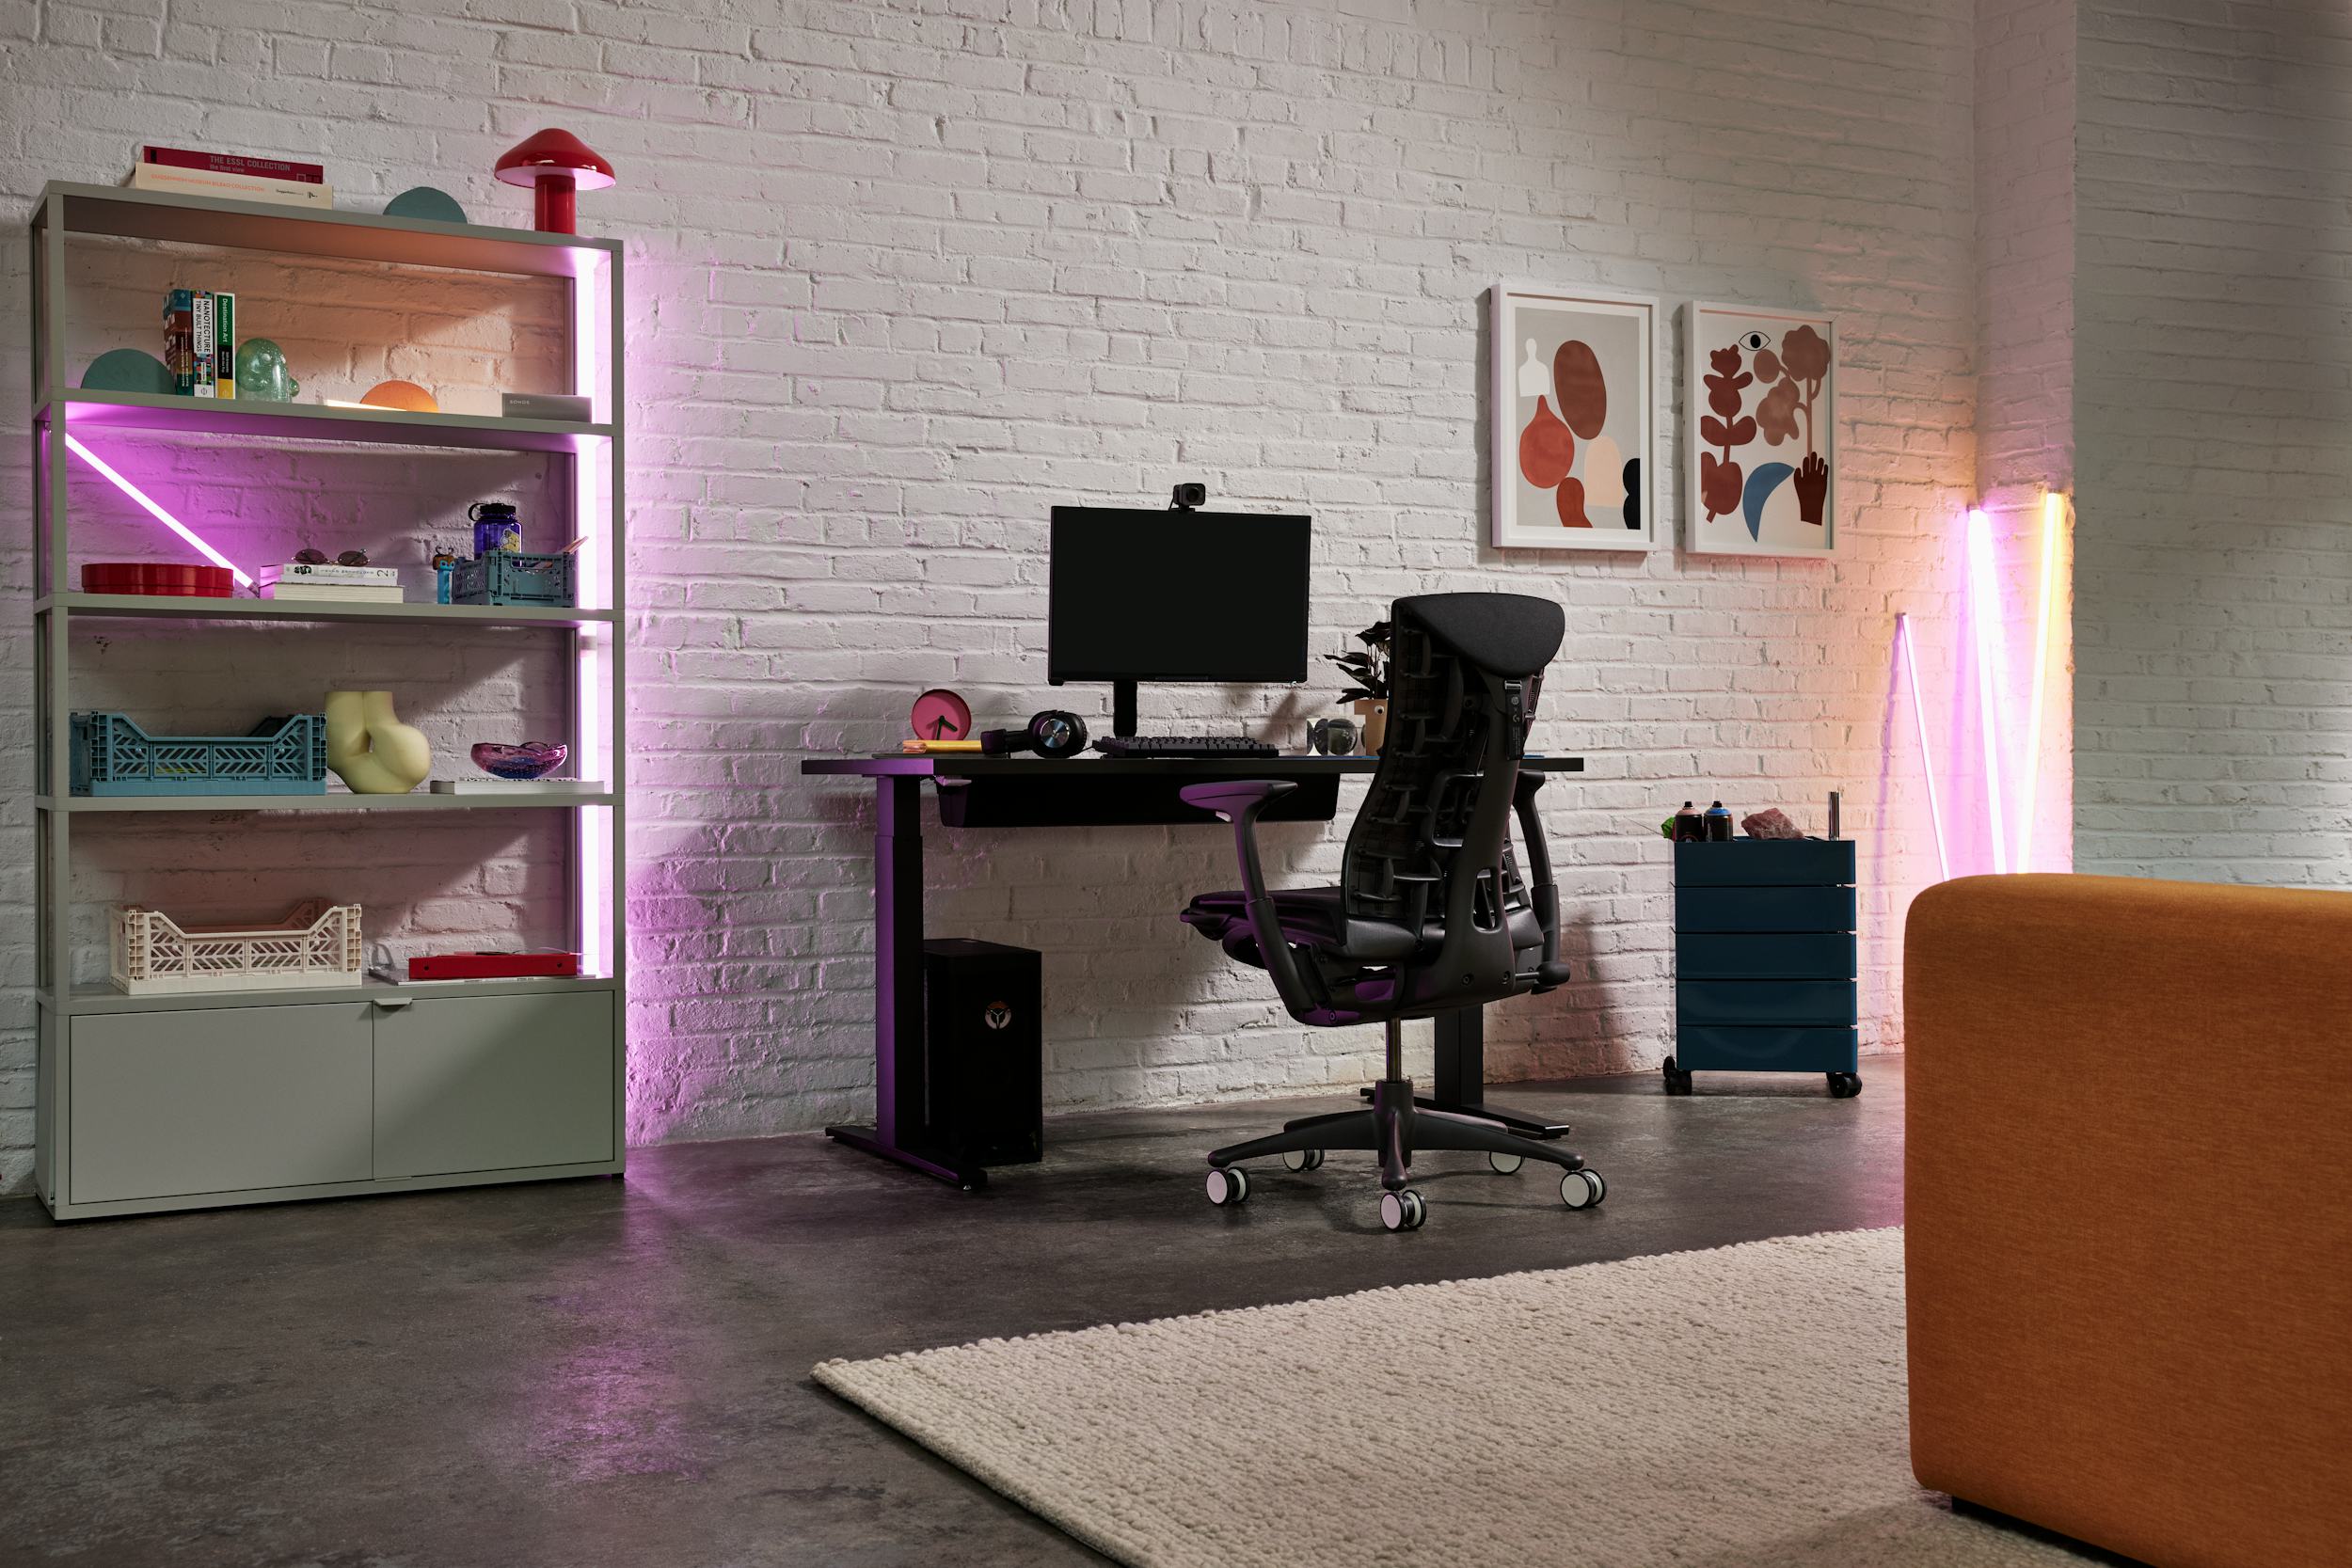 Embody Gaming Chair – Herman Miller Store